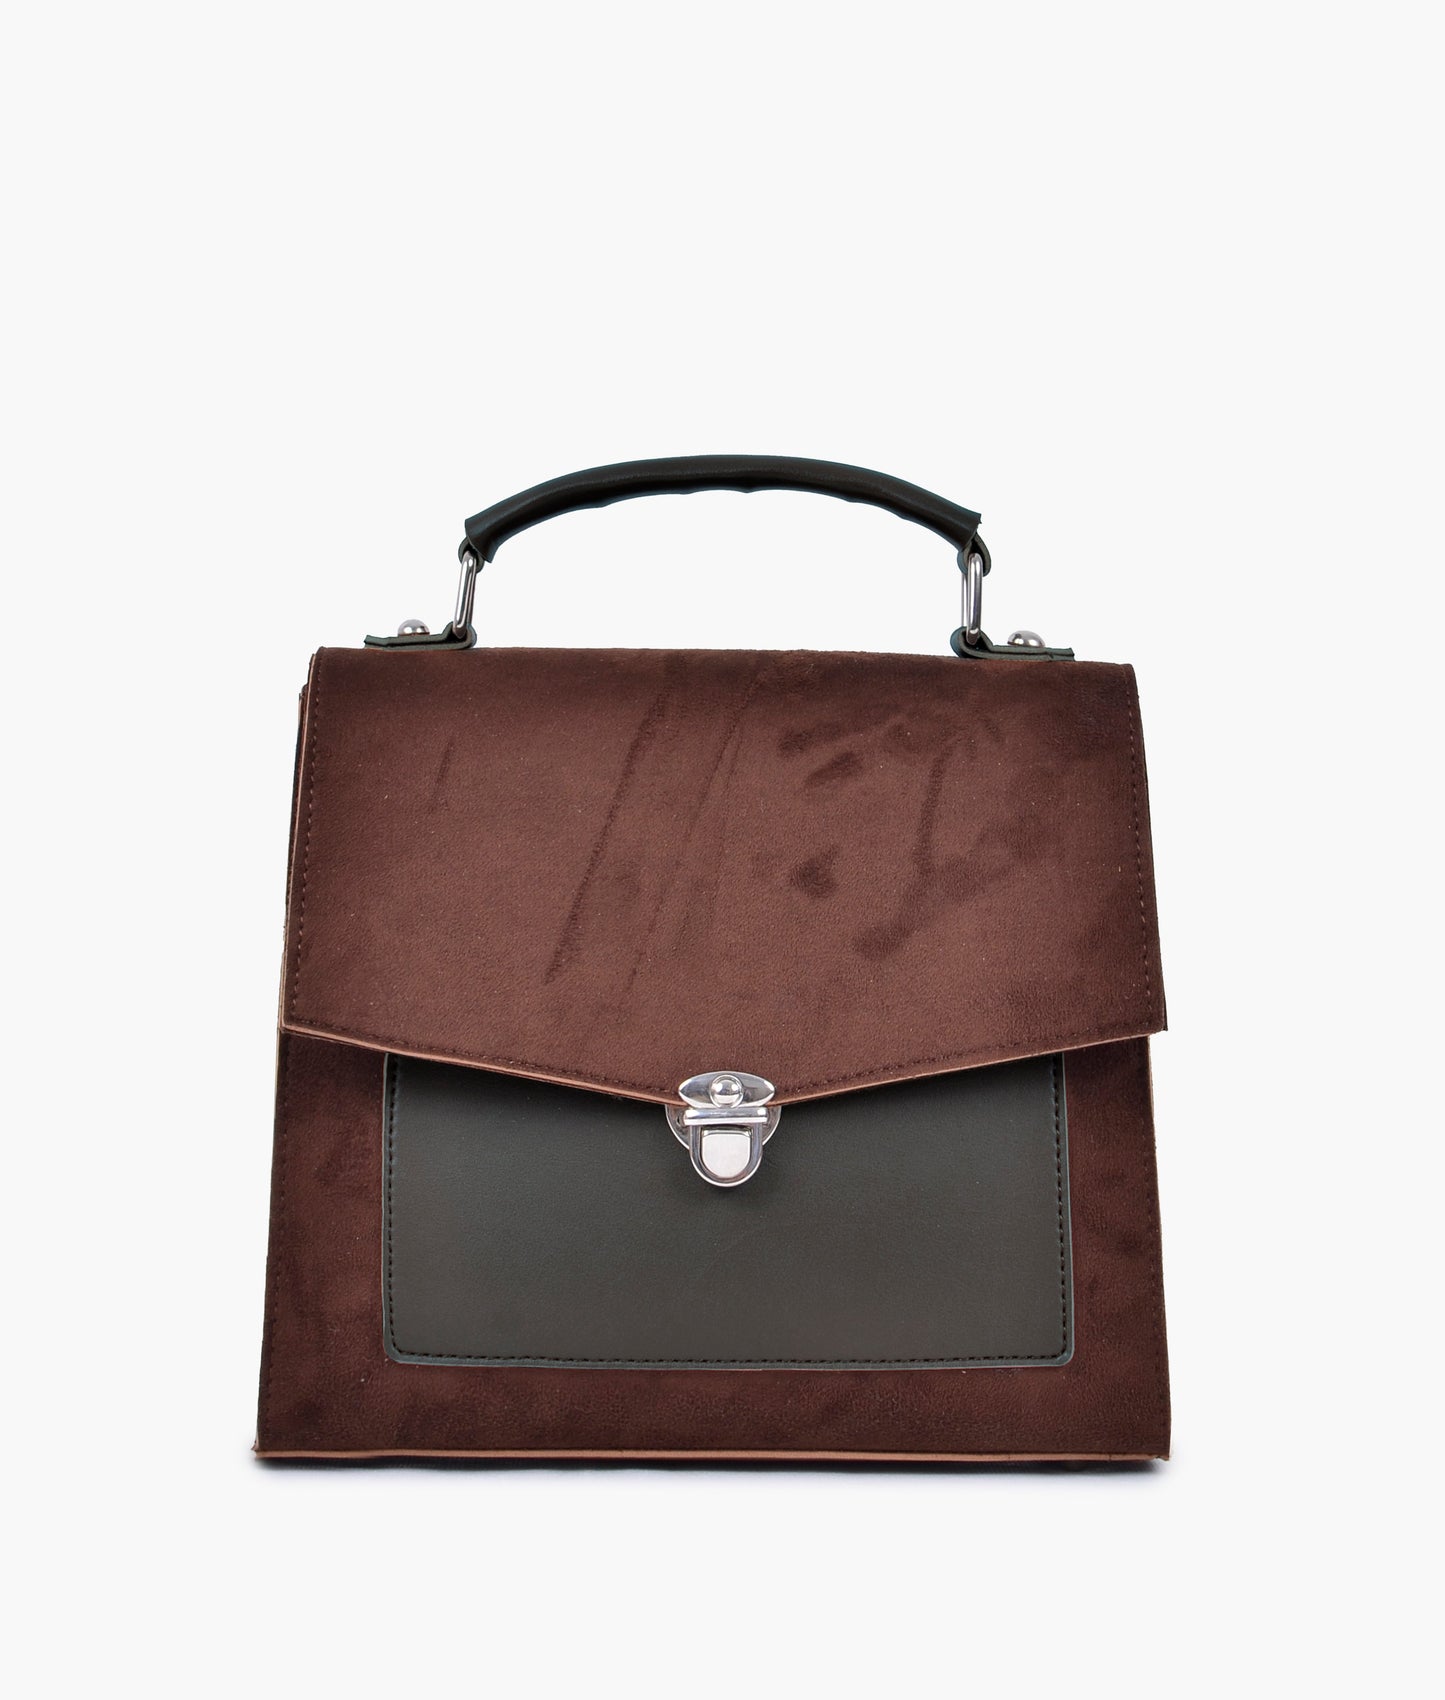 Dark Brown Handbag For Women 4192